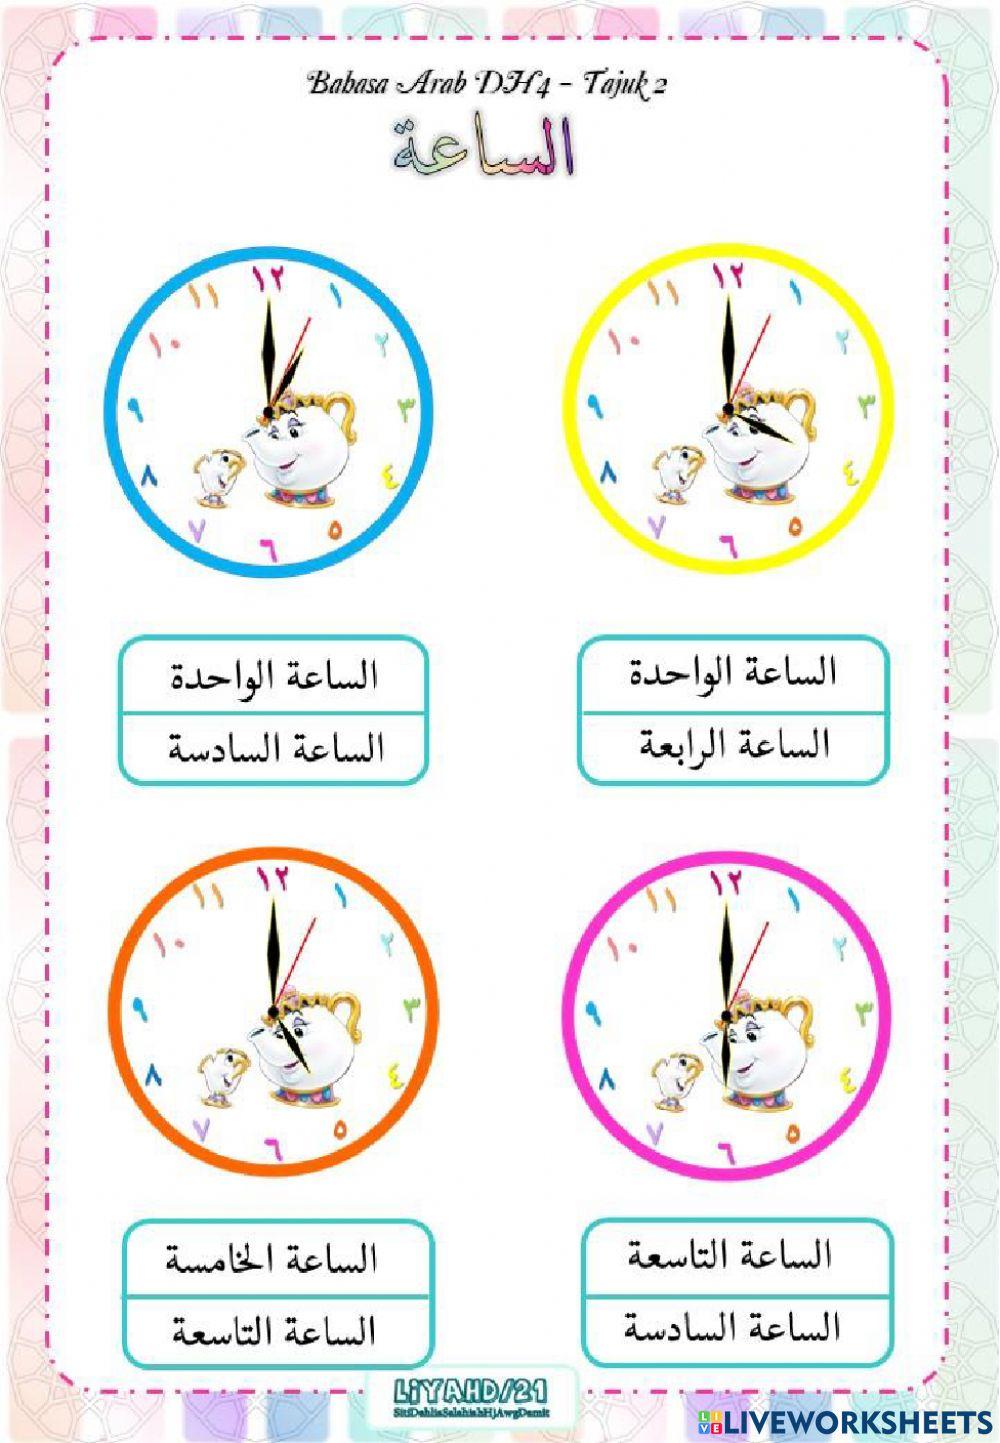 Latihan Bahasa Arab DH4 T2